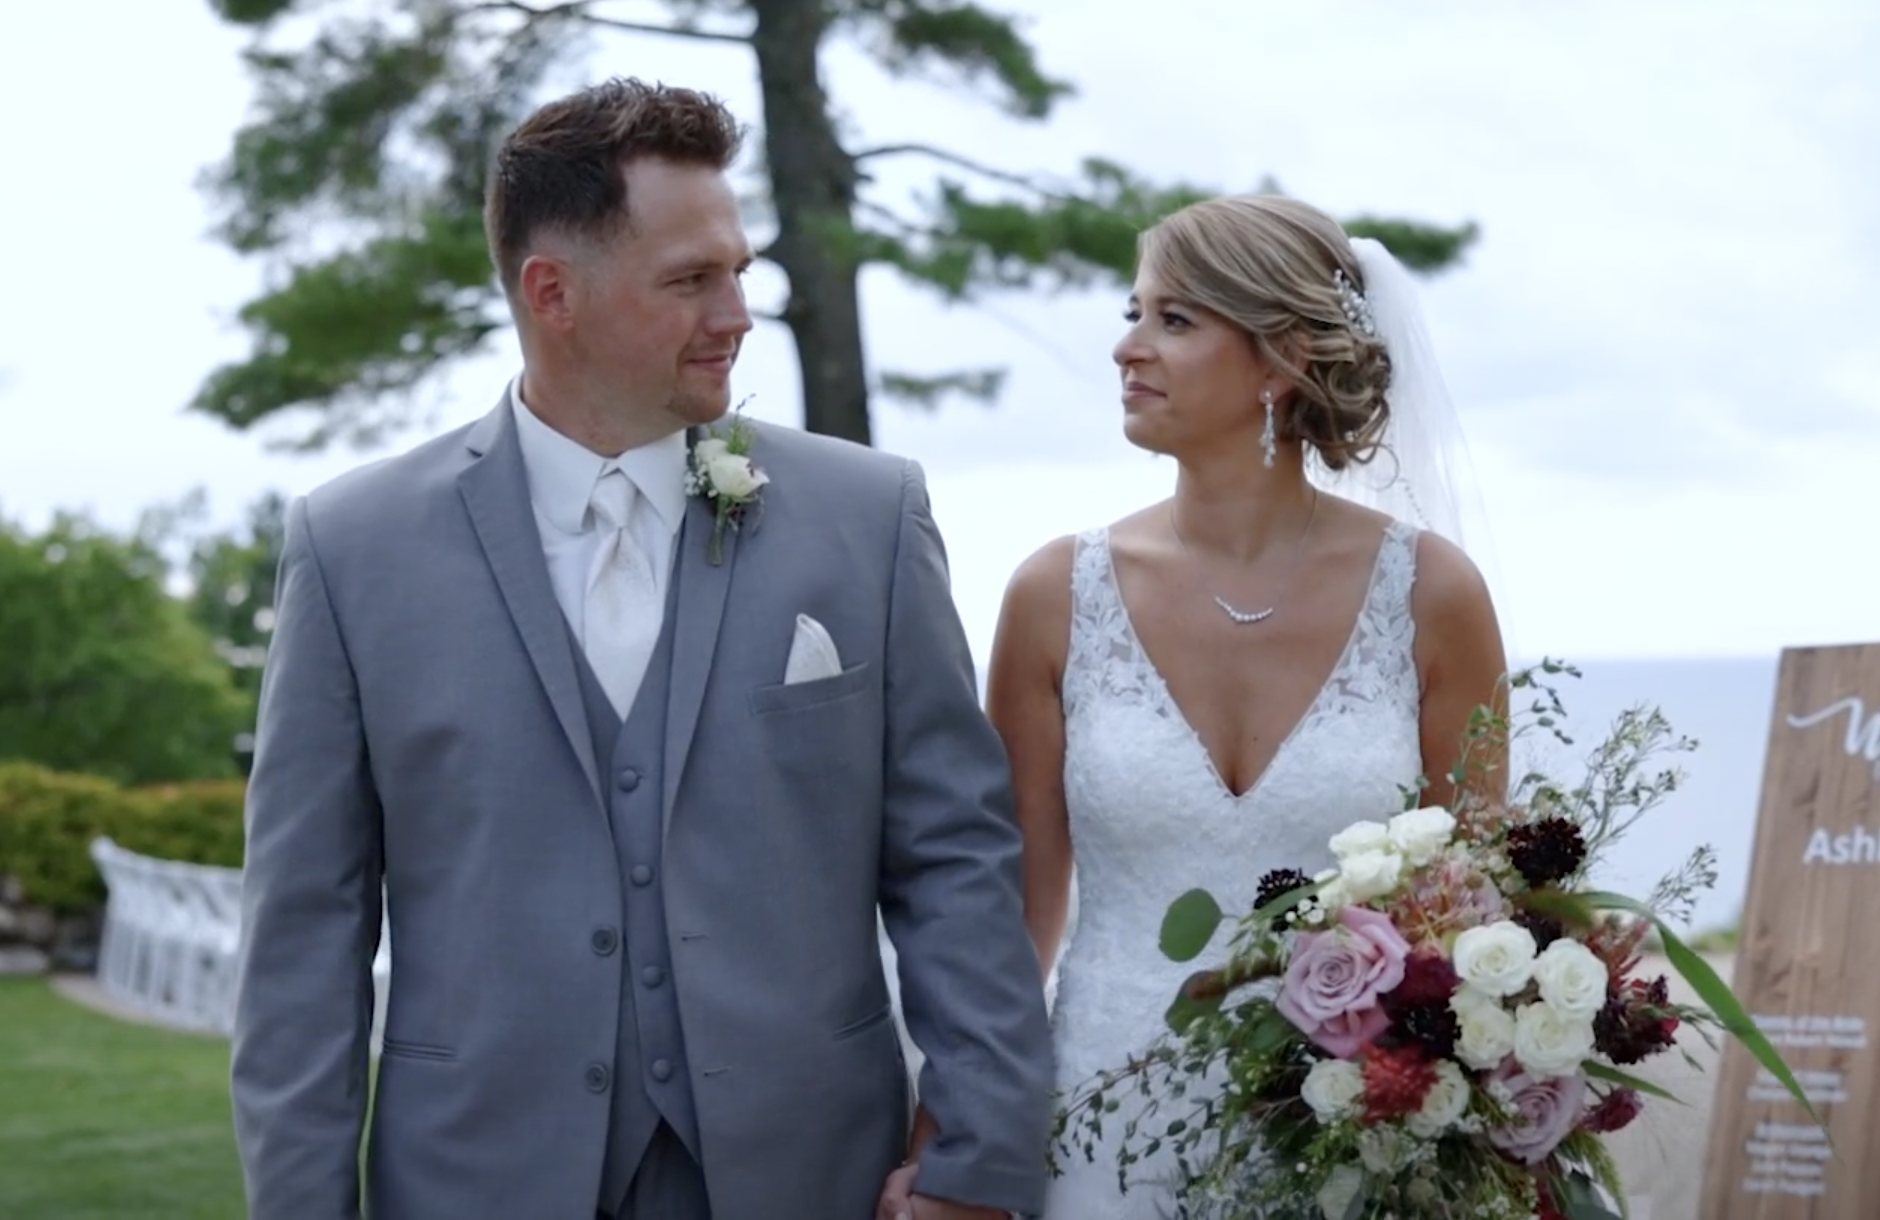 The Homestead Wedding Video at Homestead Resort in Glen Arbor Michigan